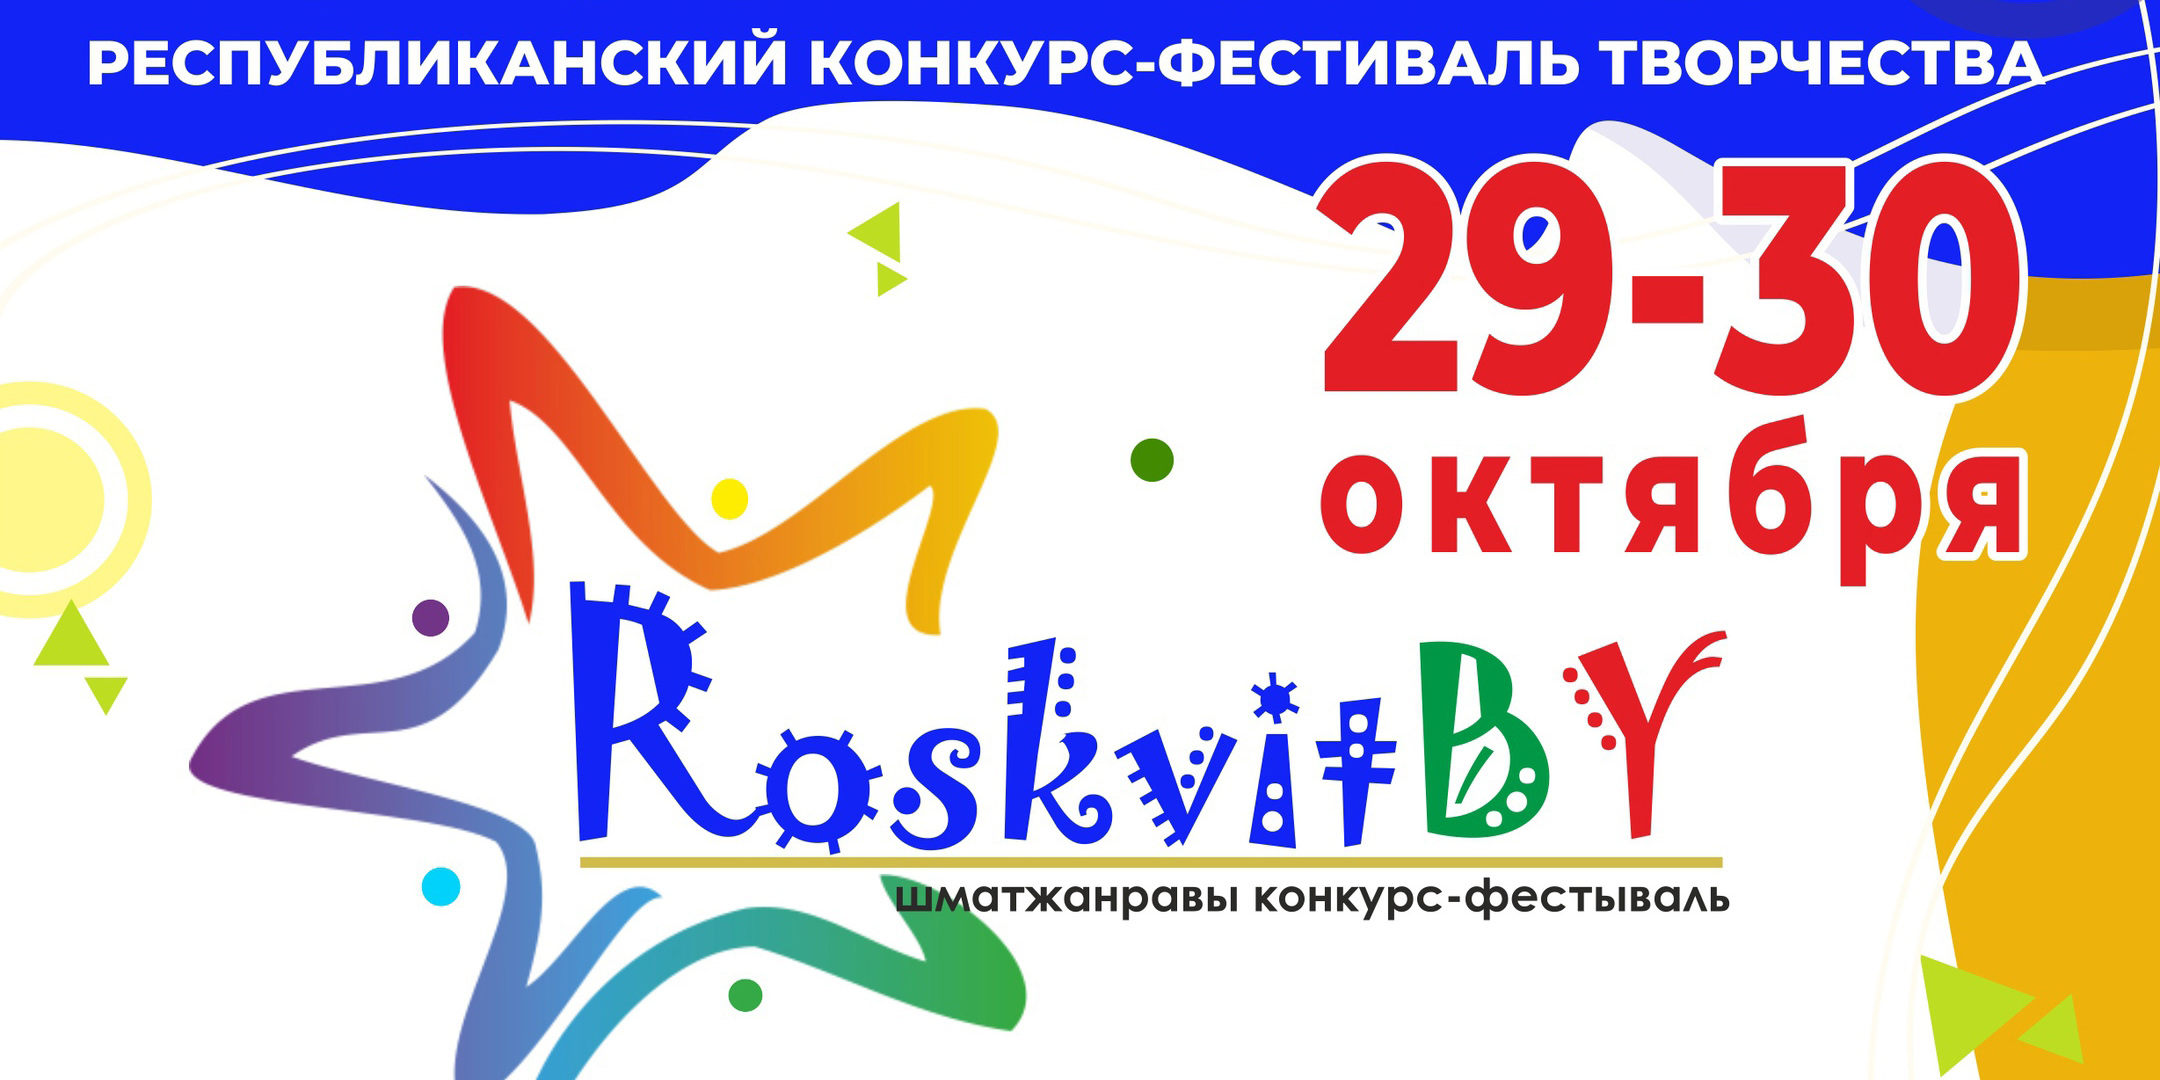 Могилевчан приглашают принять участие в конкурсе-фестивале RoskvitBY 